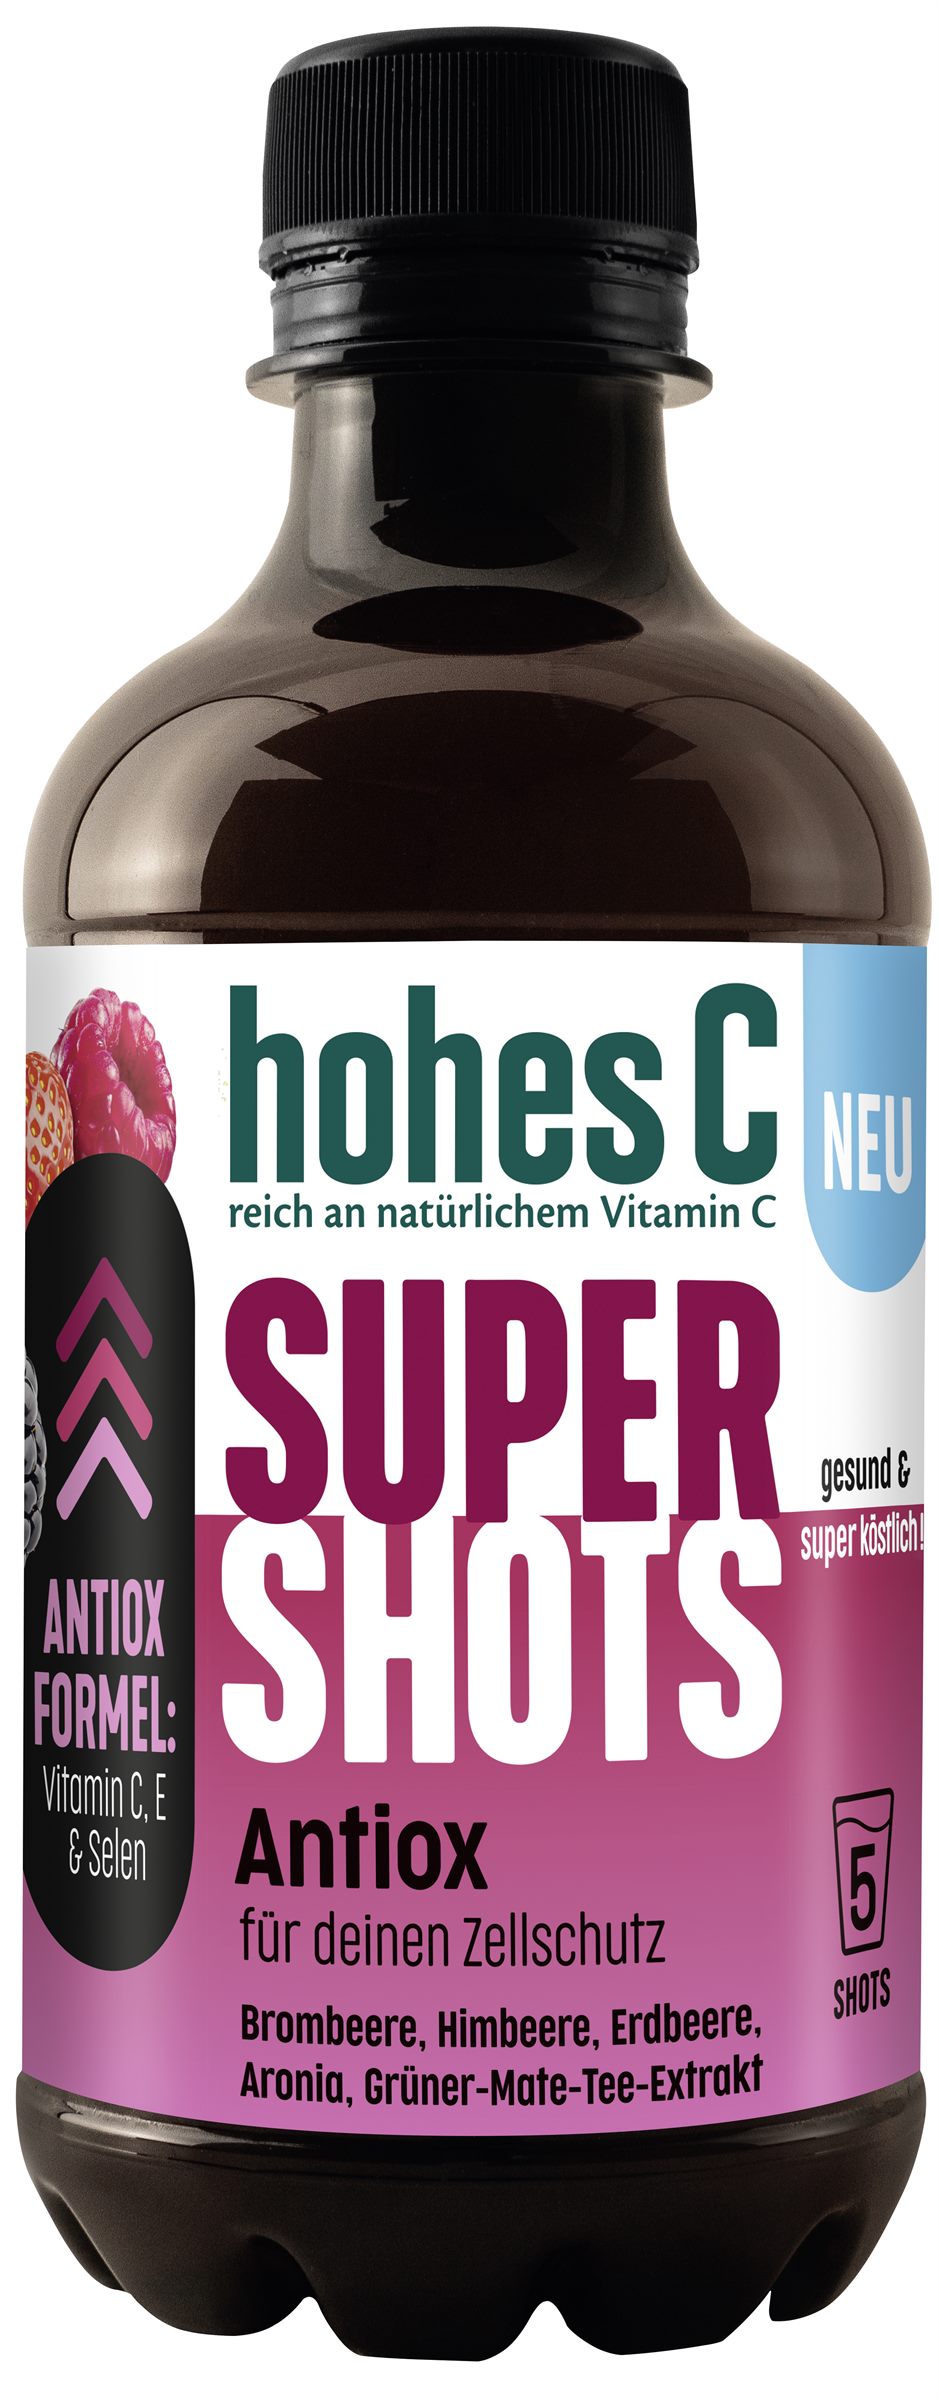 hohesC: Super Shots Antiox